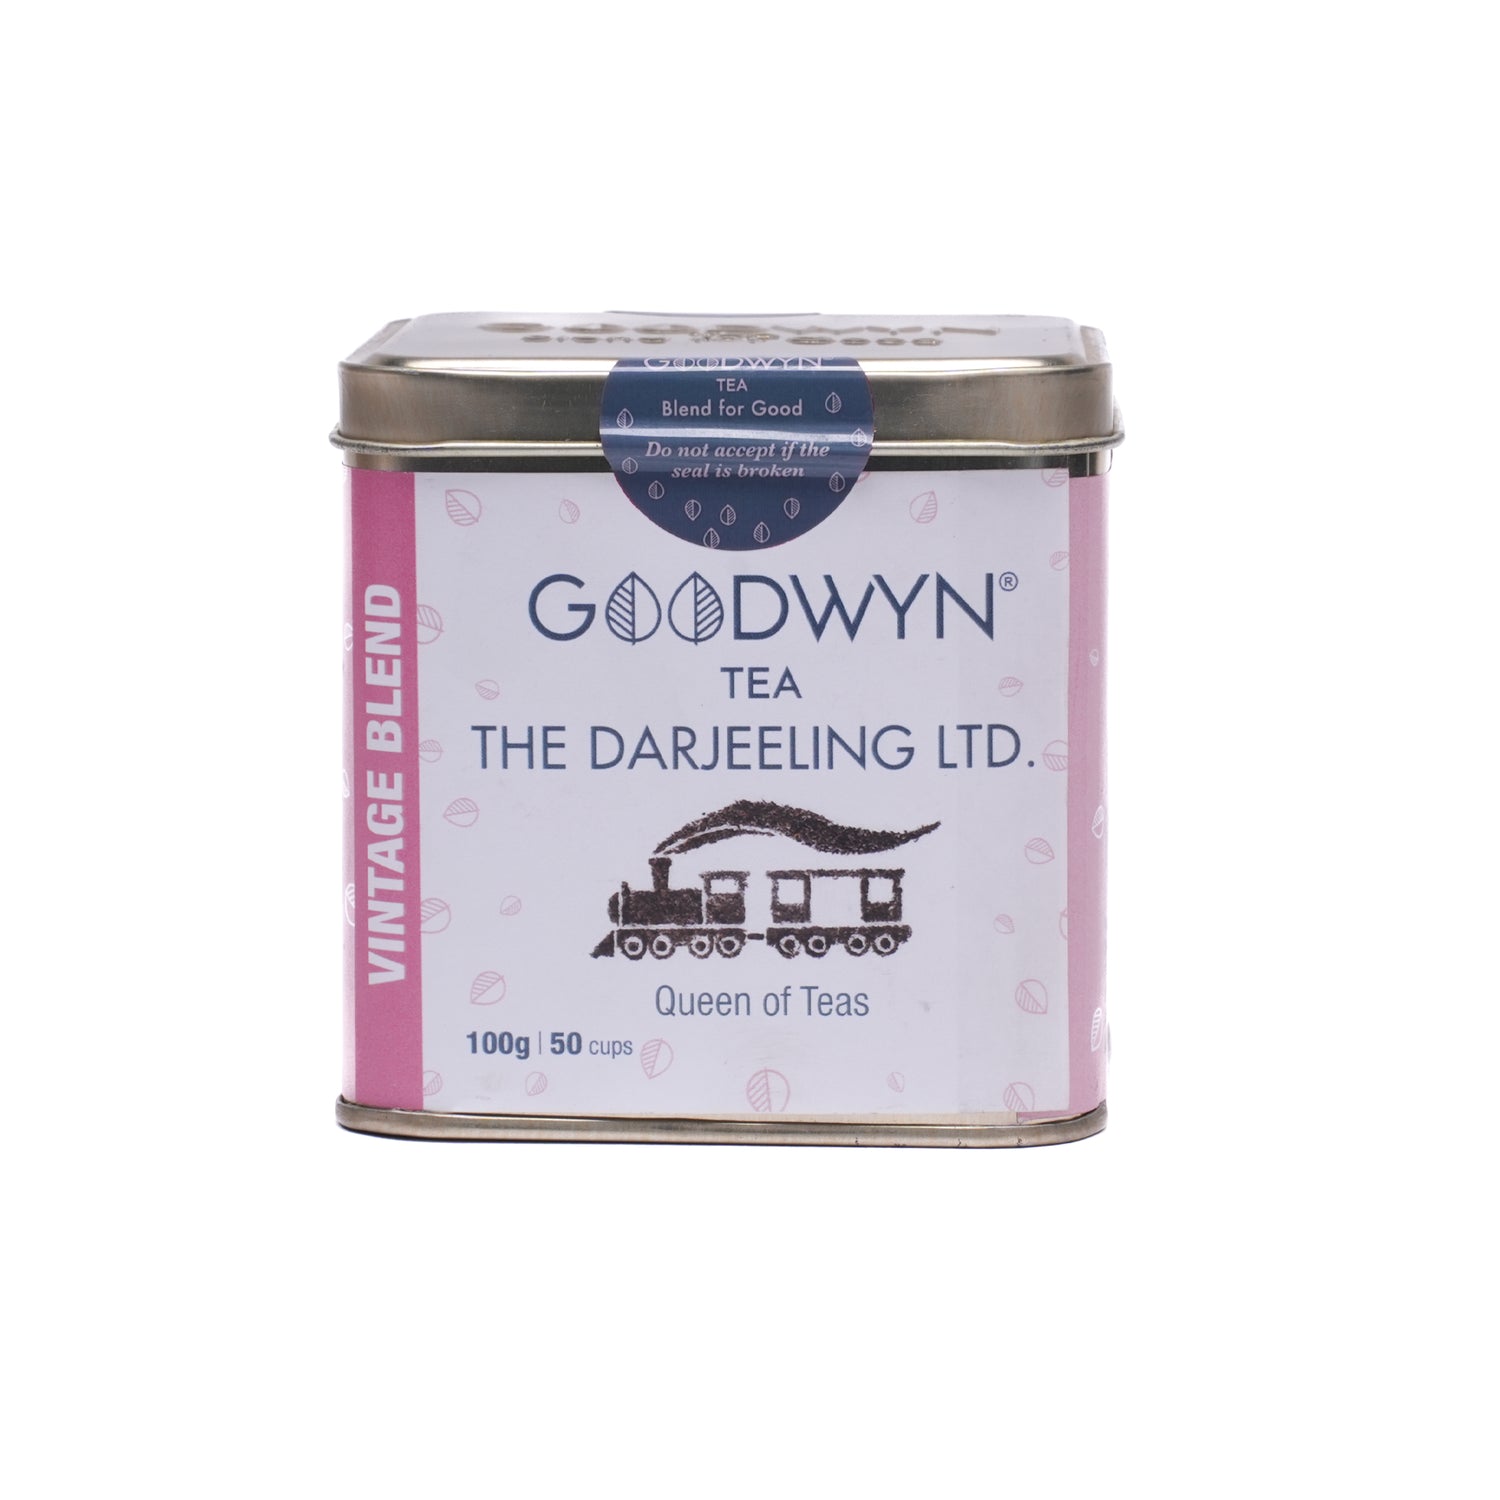 The Darjeeling Ltd.